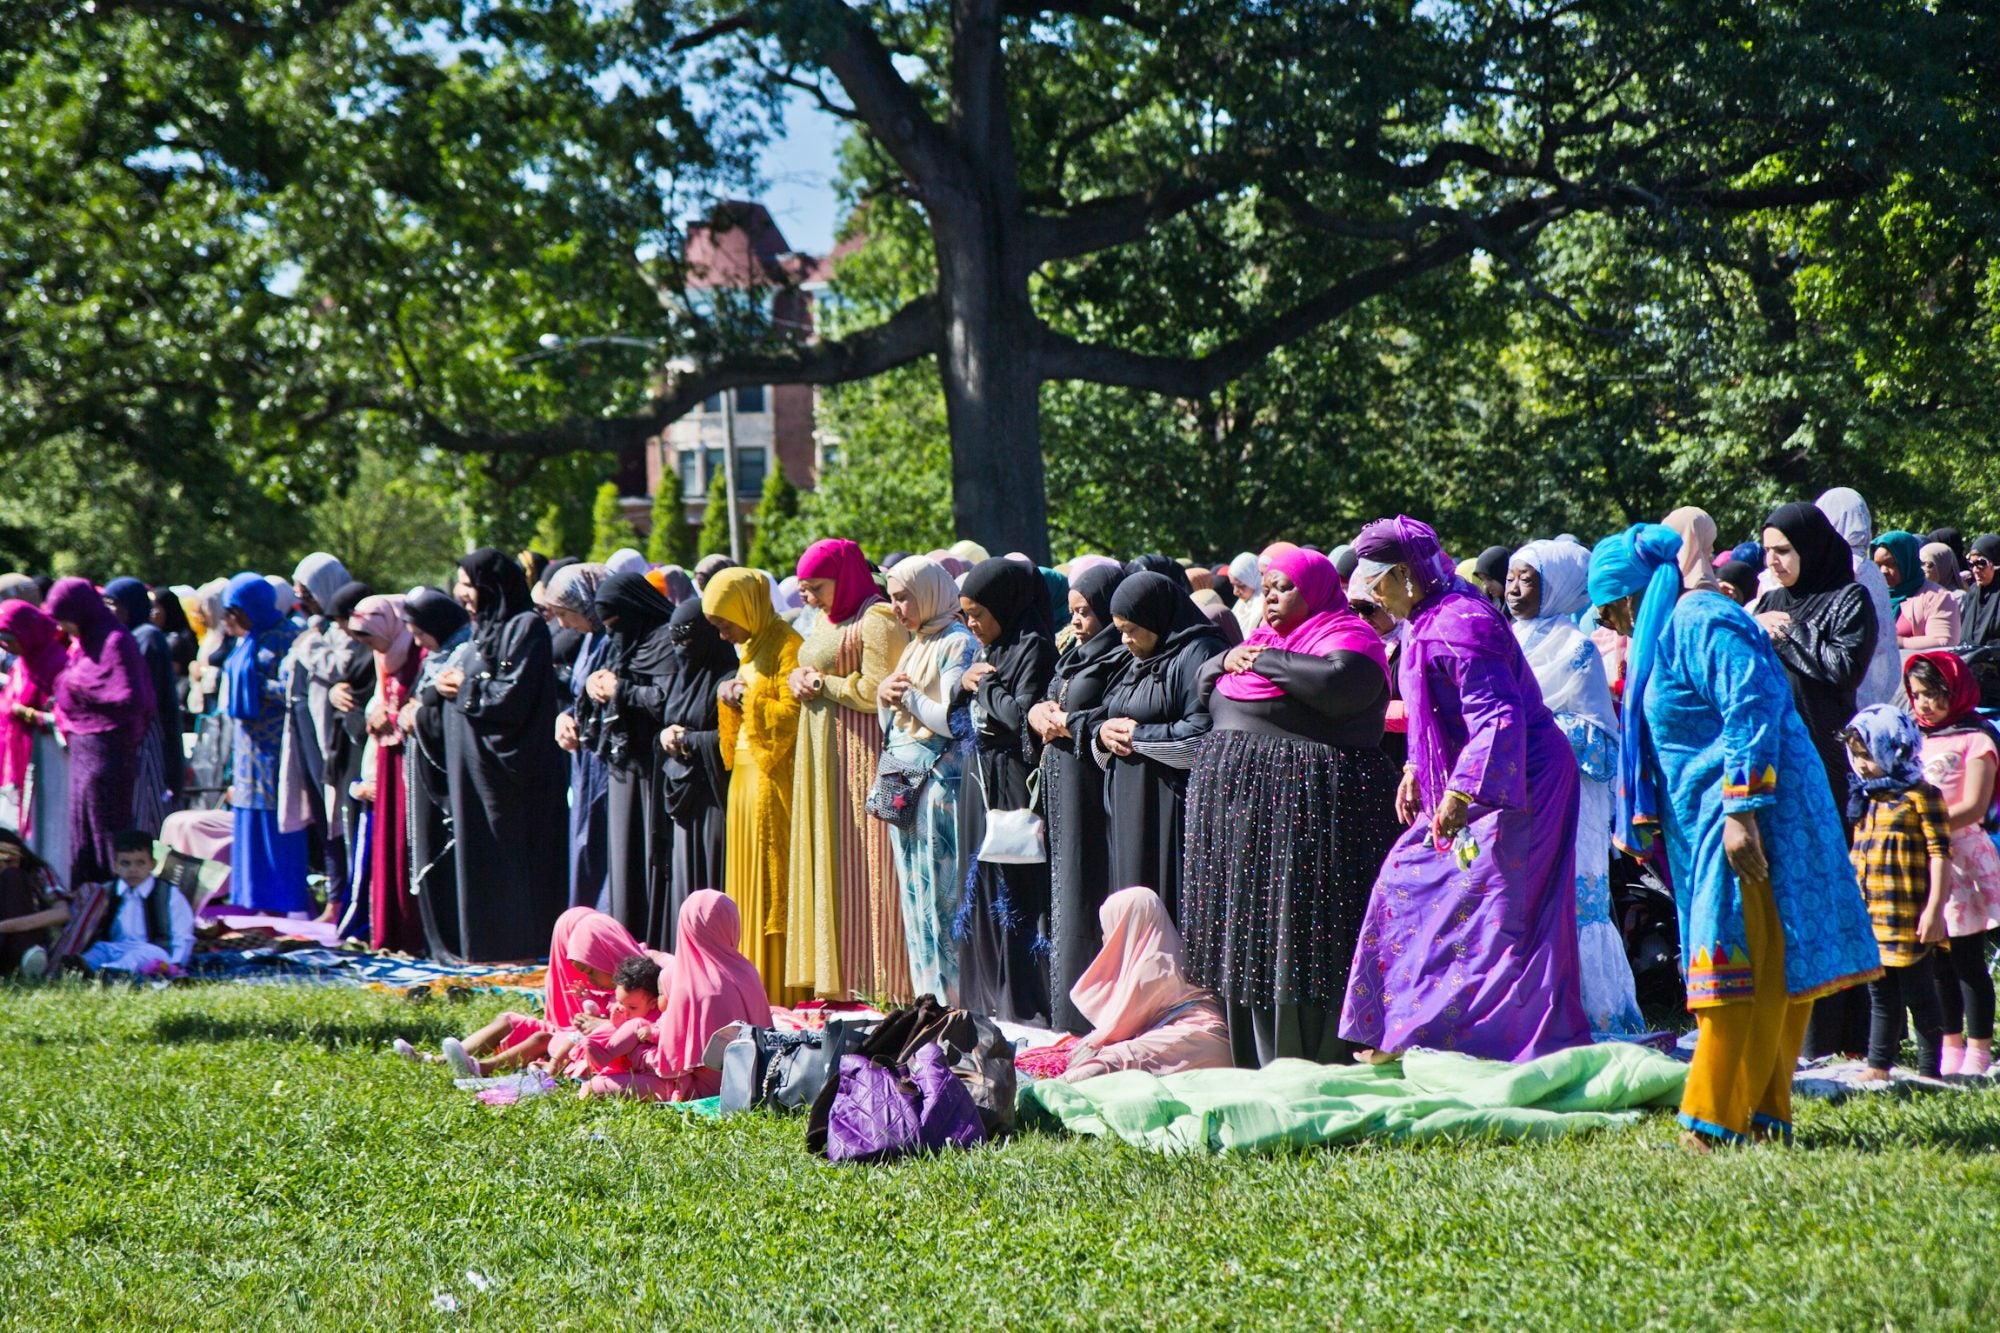 Philadelphia Eid in the Park brings thousands to celebrate end of Ramadan